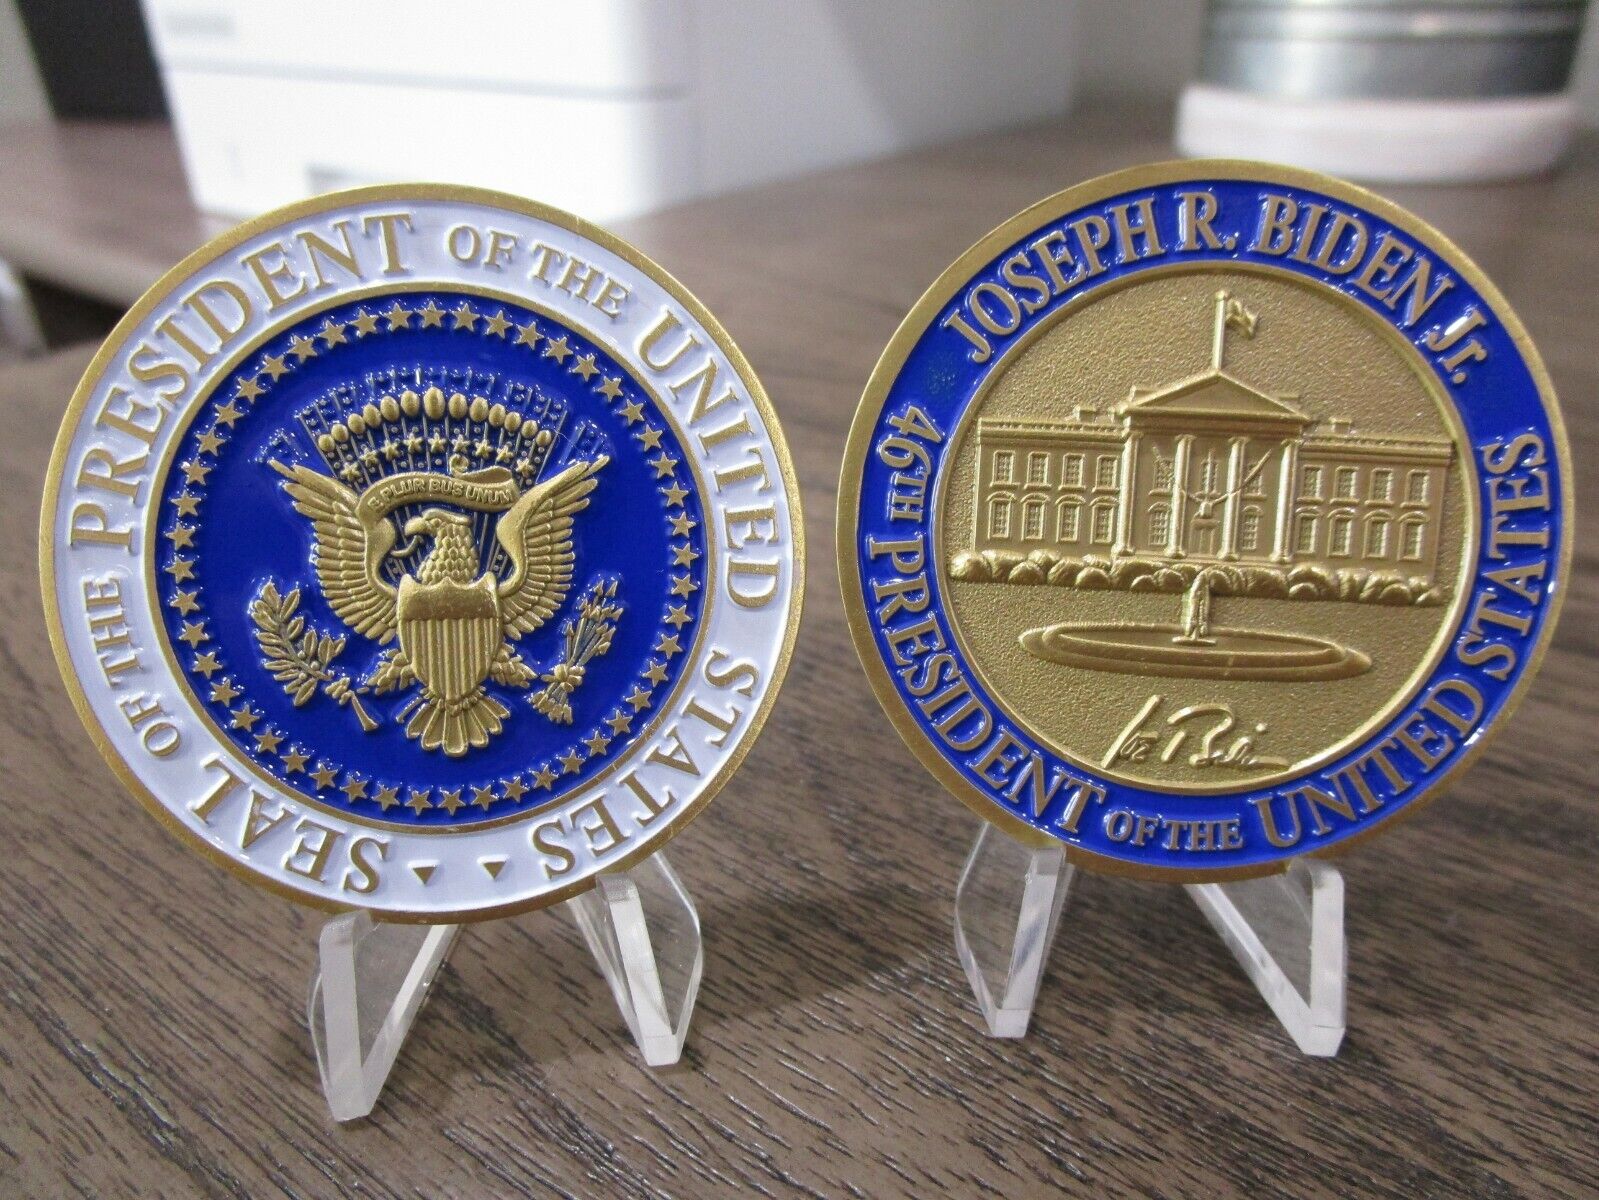 President Joe Biden 46th POTUS Joseph R. Biden Jr. Challenge Coin